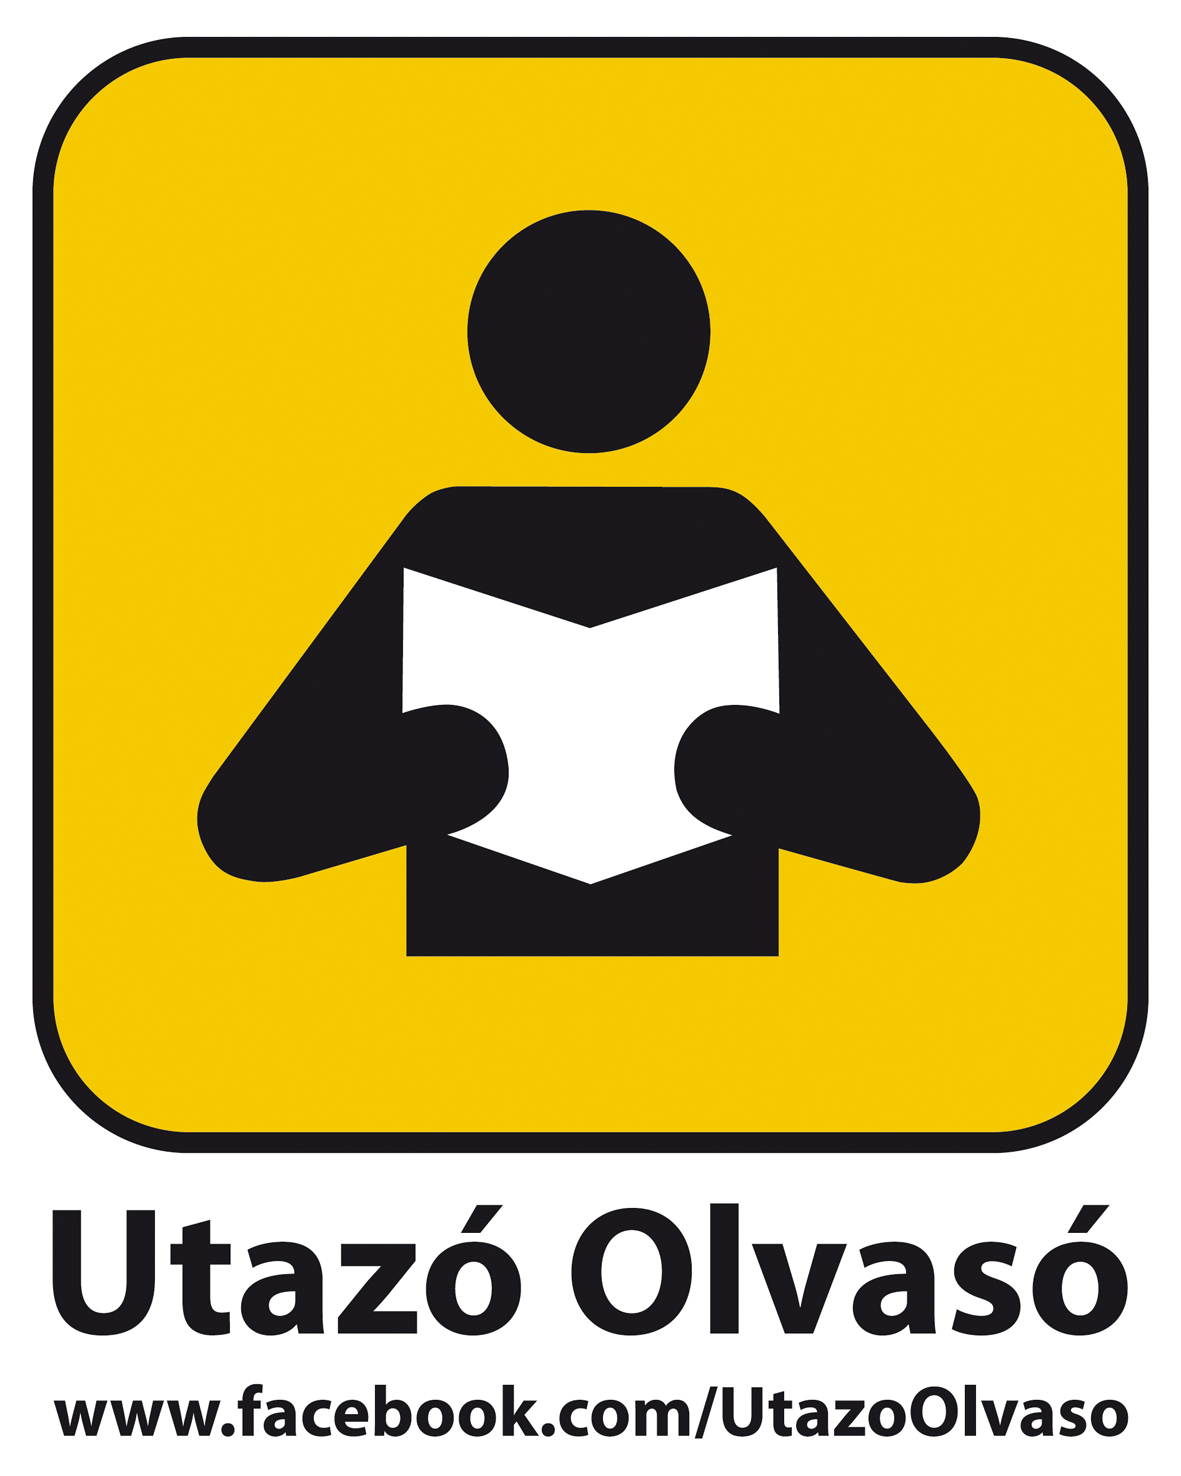 www.facebook.com/UtazoOlvaso